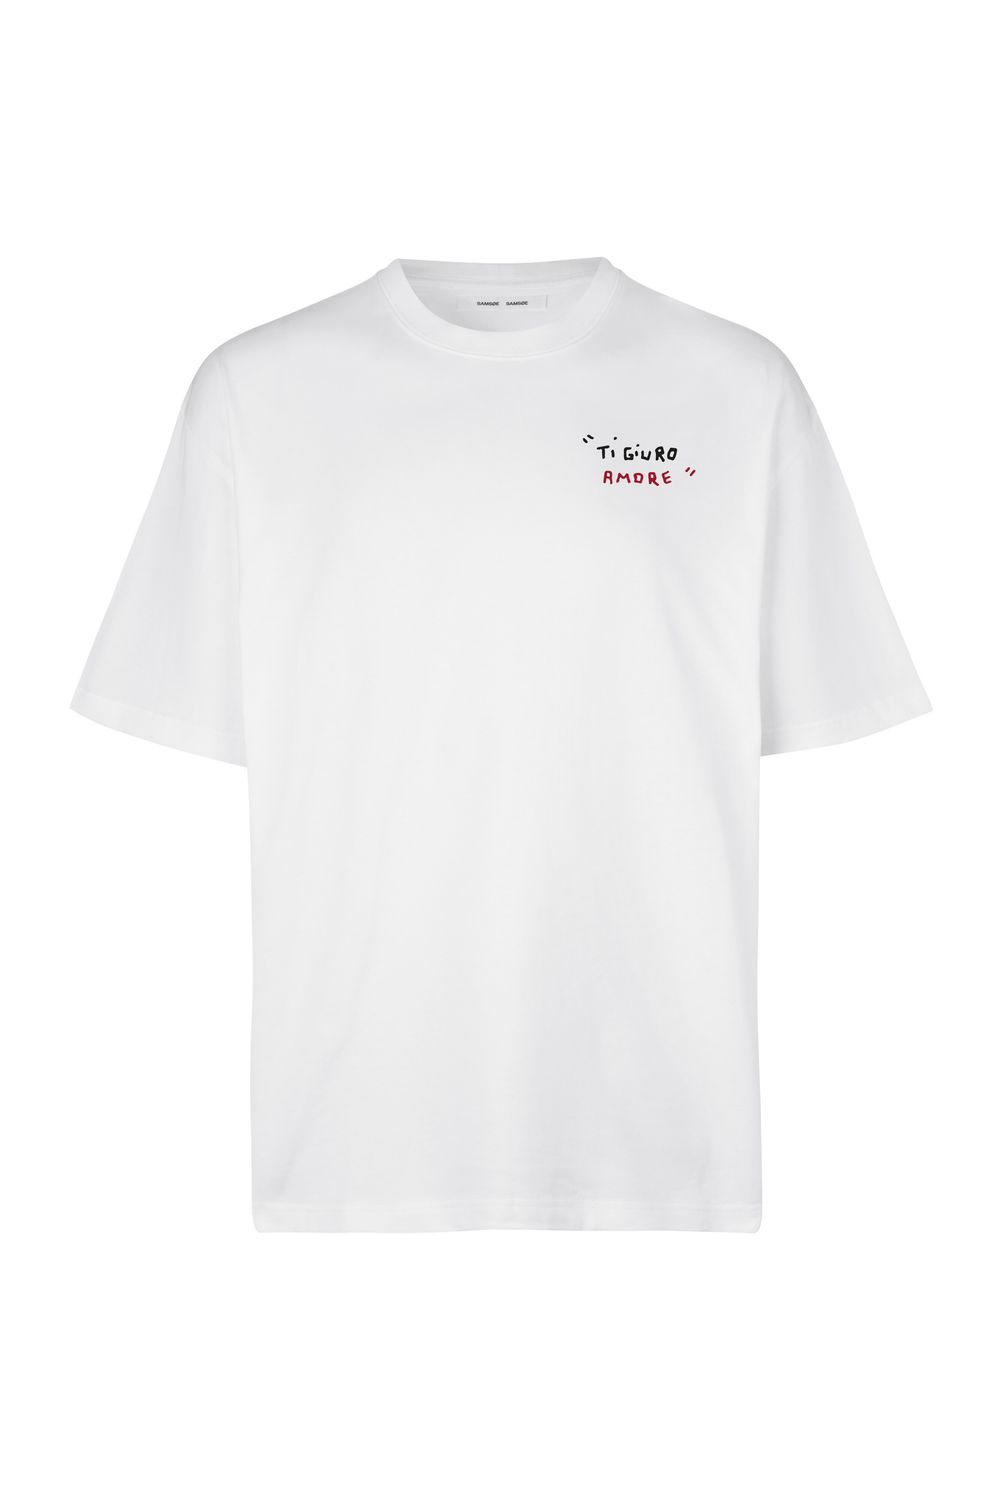 Samsøe Samsøe Sagiotto T-Shirt 11725 White Ti Giuro